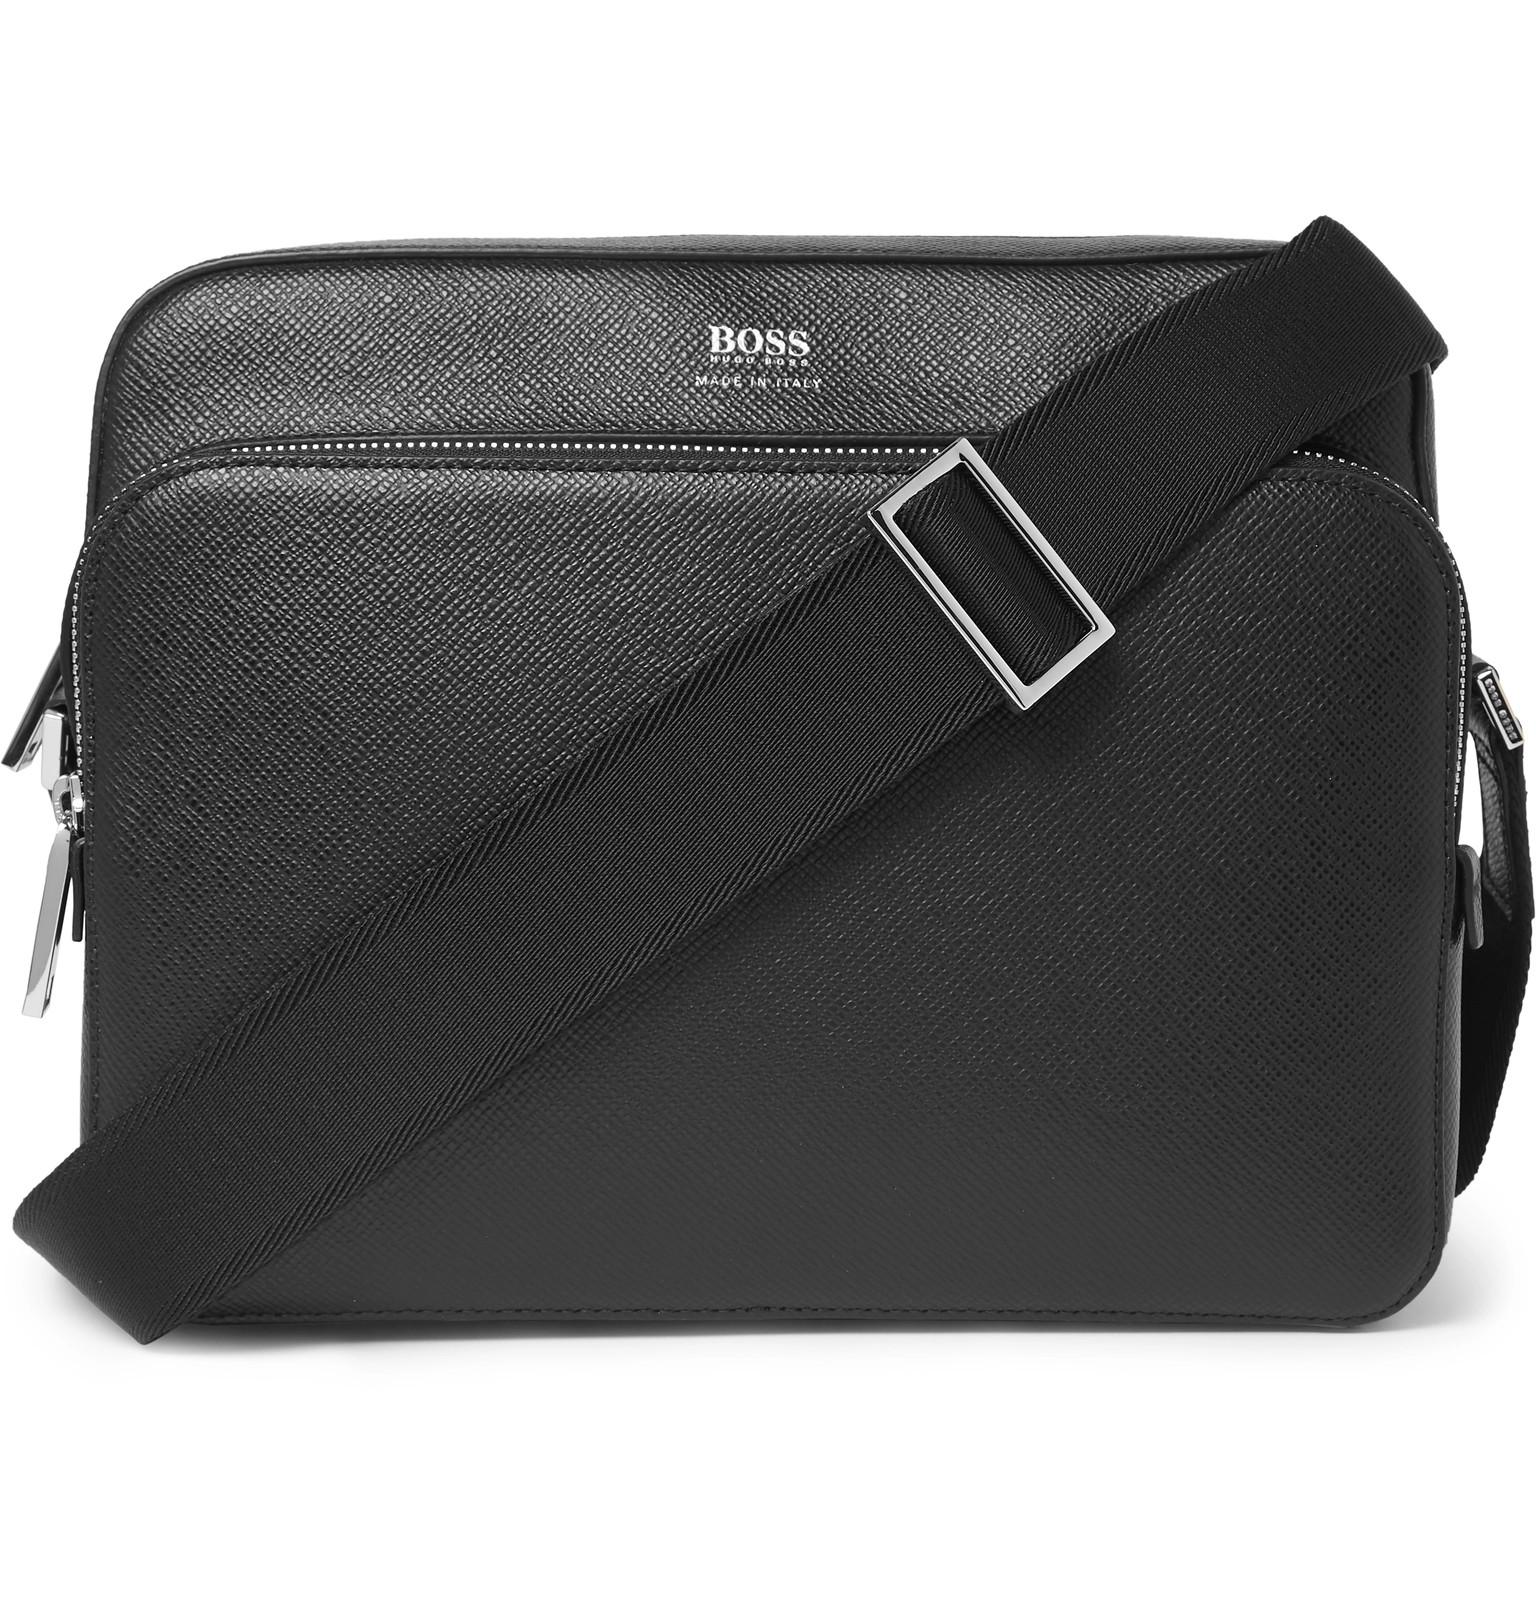 Hugo Boss Man Bag Leather Cheap Retailers, Save 54% | jlcatj.gob.mx